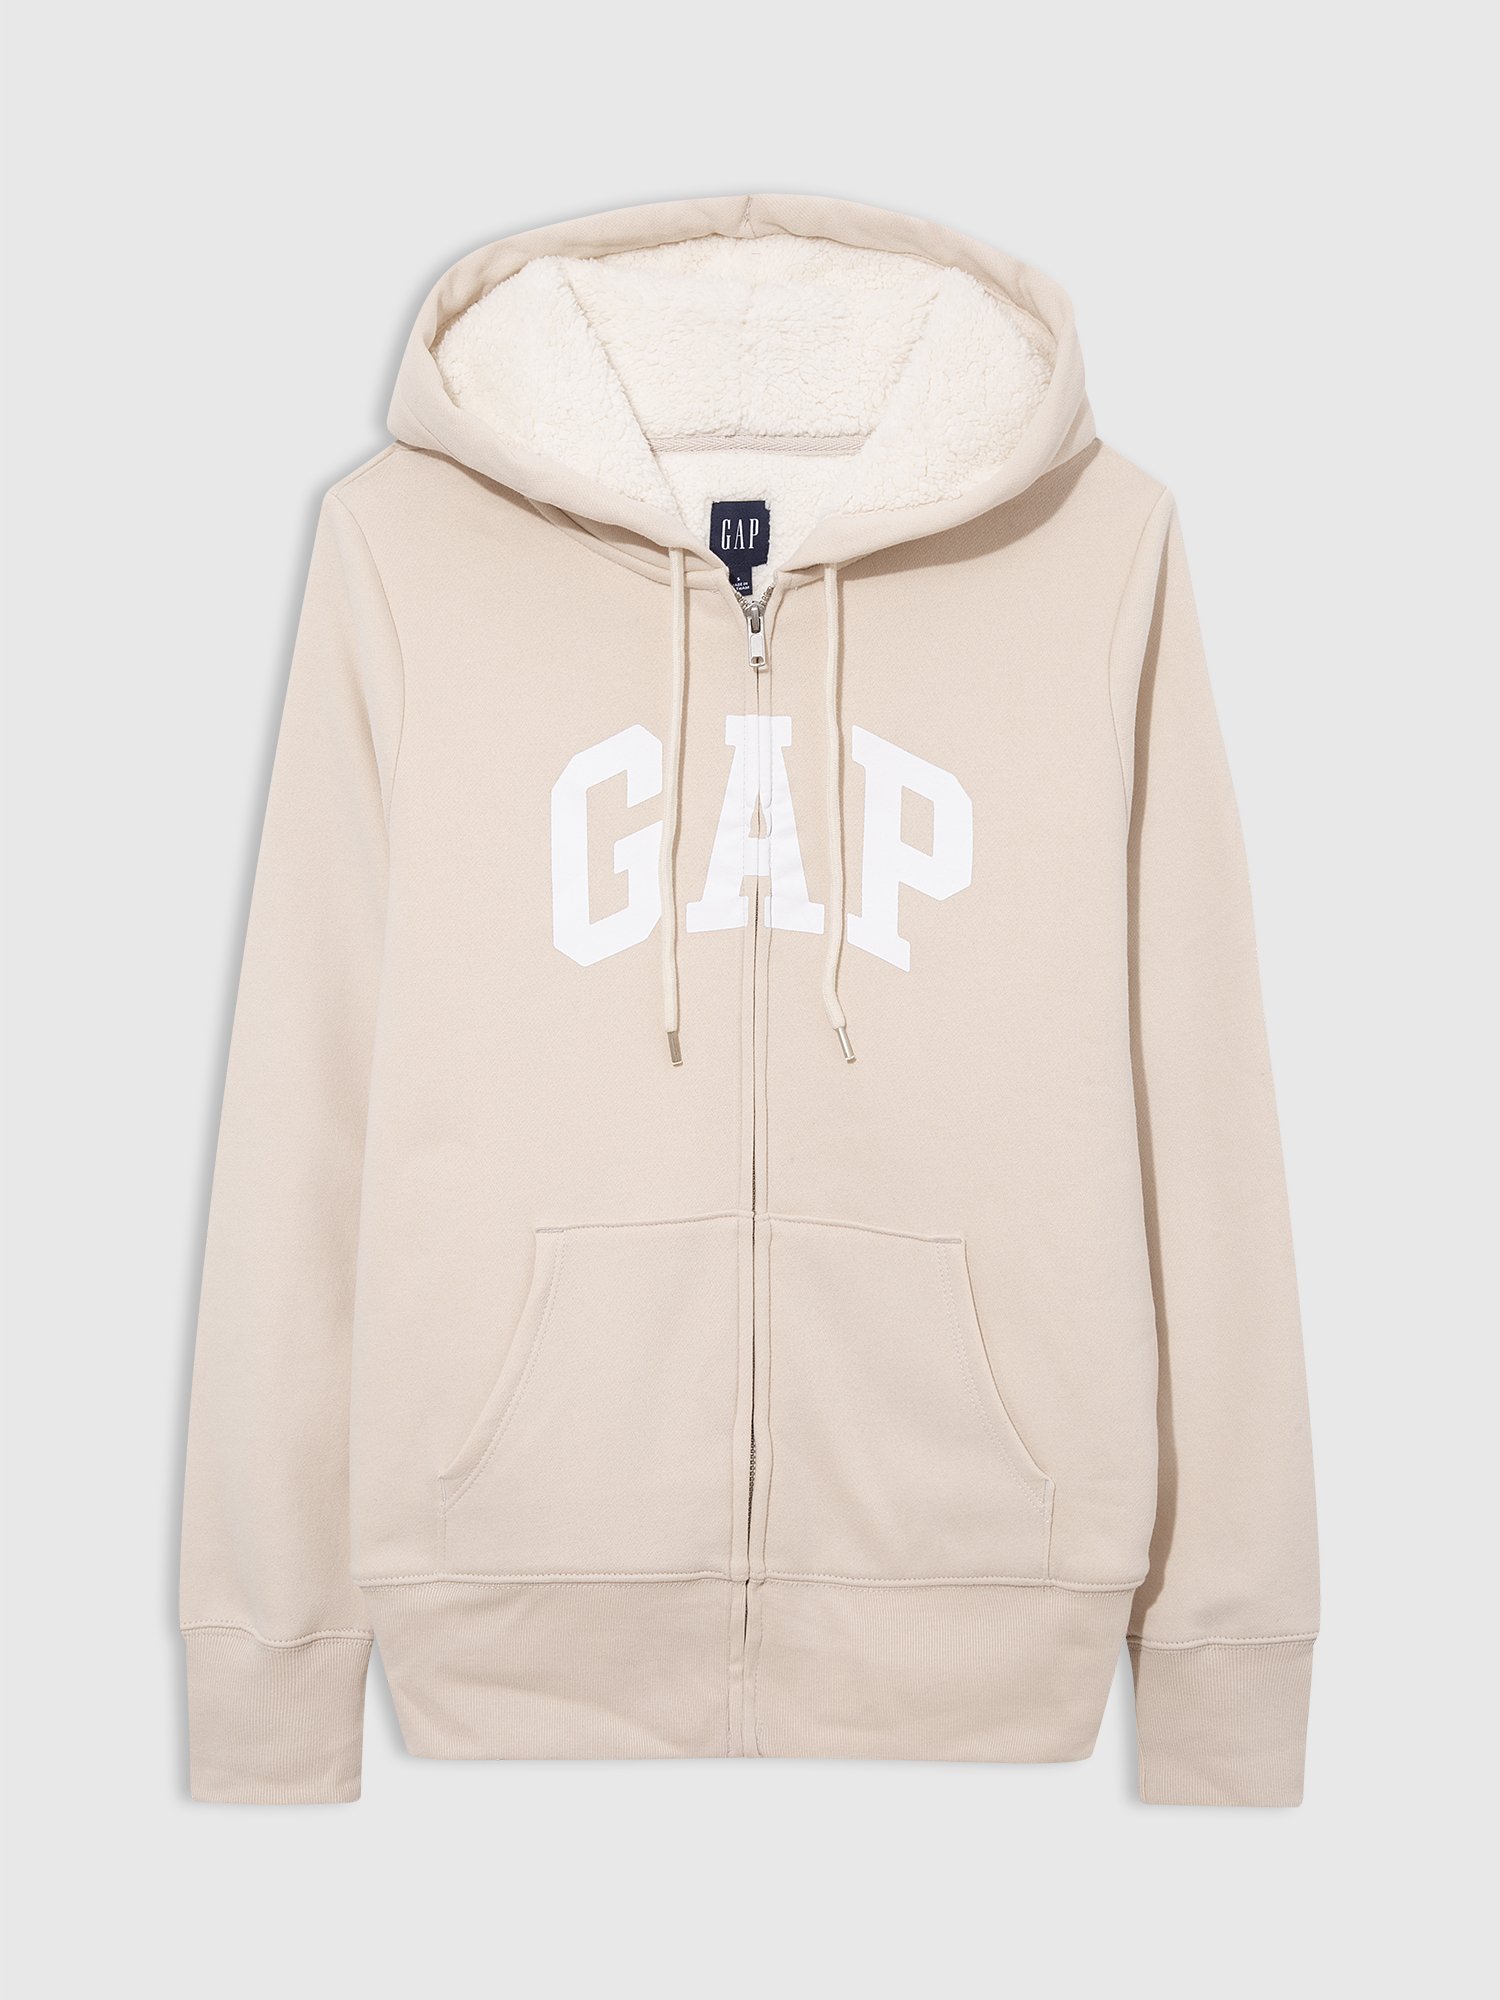 Gap Logo Sherpa Sweatshirt product image